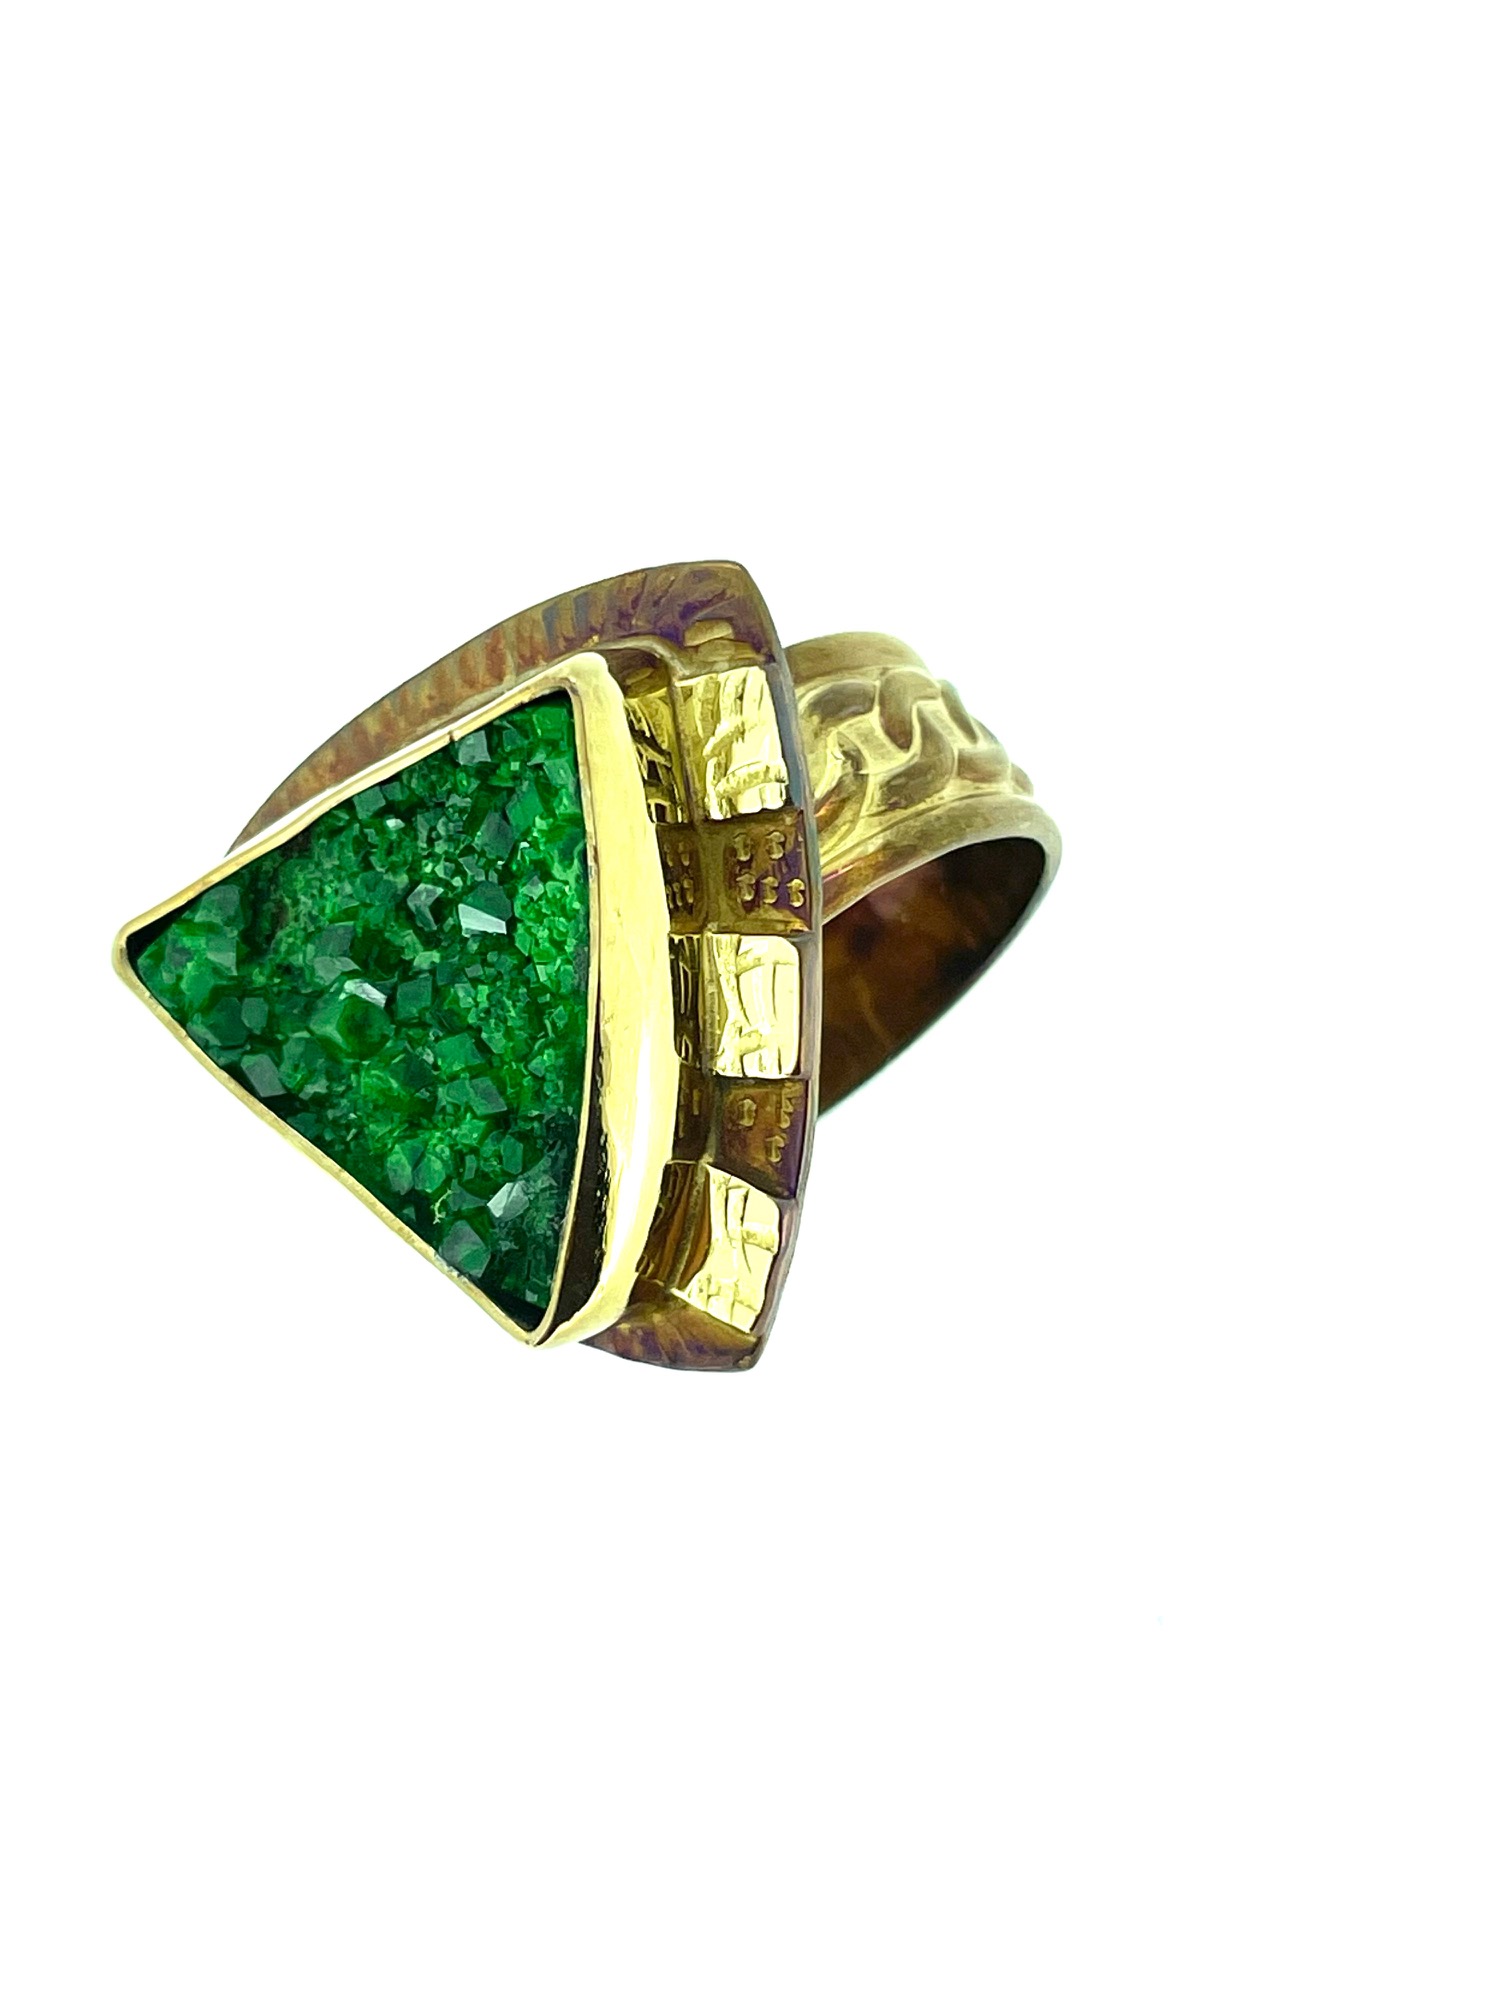 Sterling Silver, 18k, Uvarovite (Green Garnet) Ring - Size 7